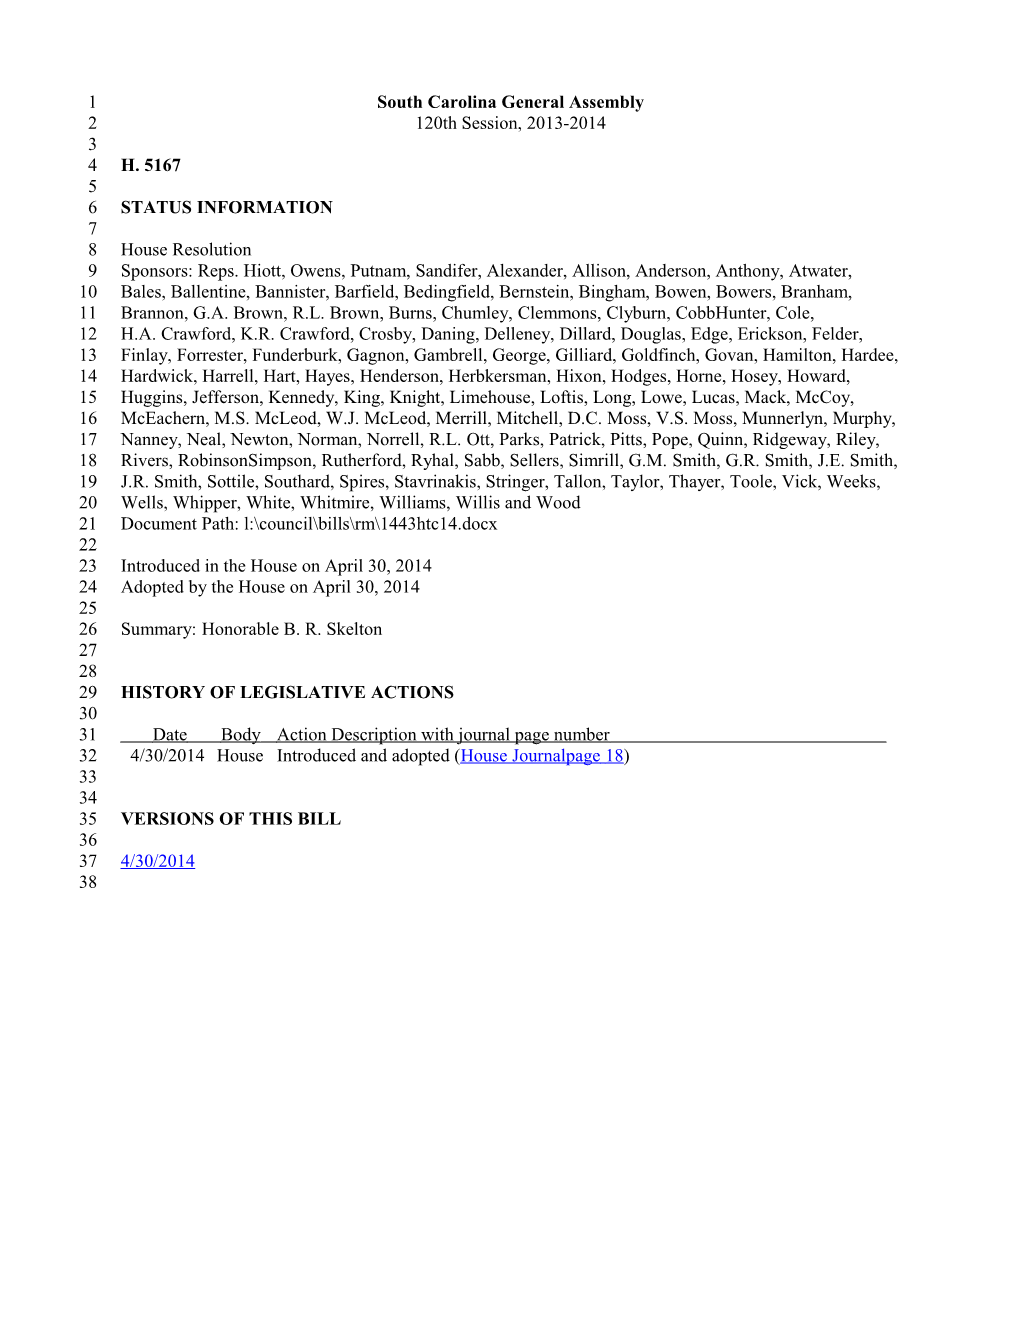 2013-2014 Bill 5167: Honorable B. R. Skelton - South Carolina Legislature Online